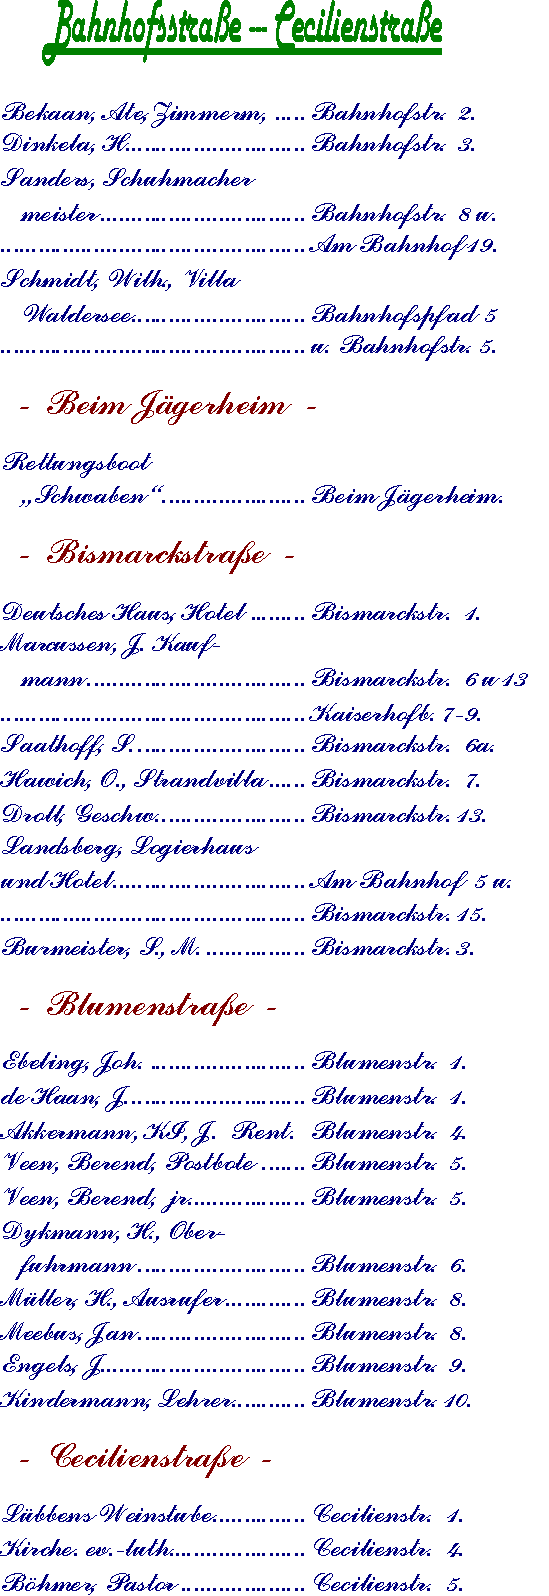 str_bahnhofstr